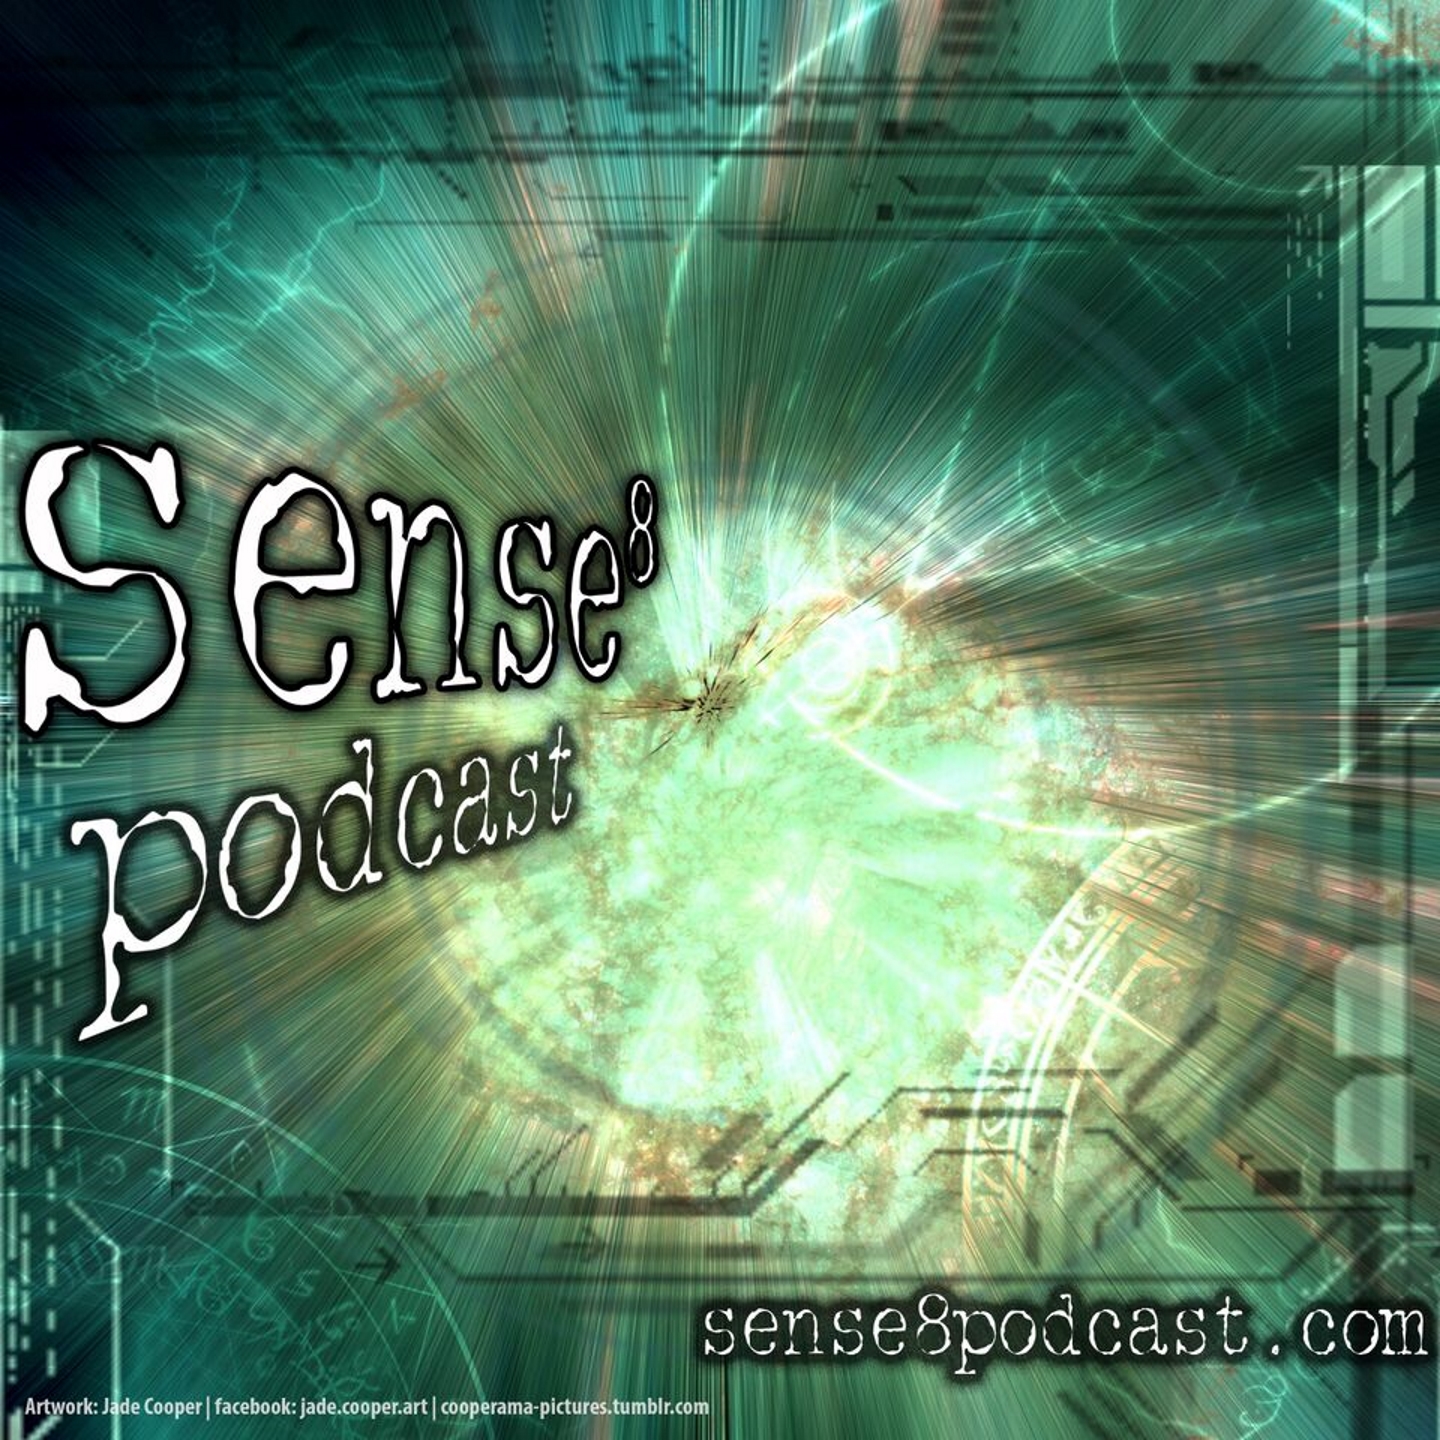 The Sense8 Podcast